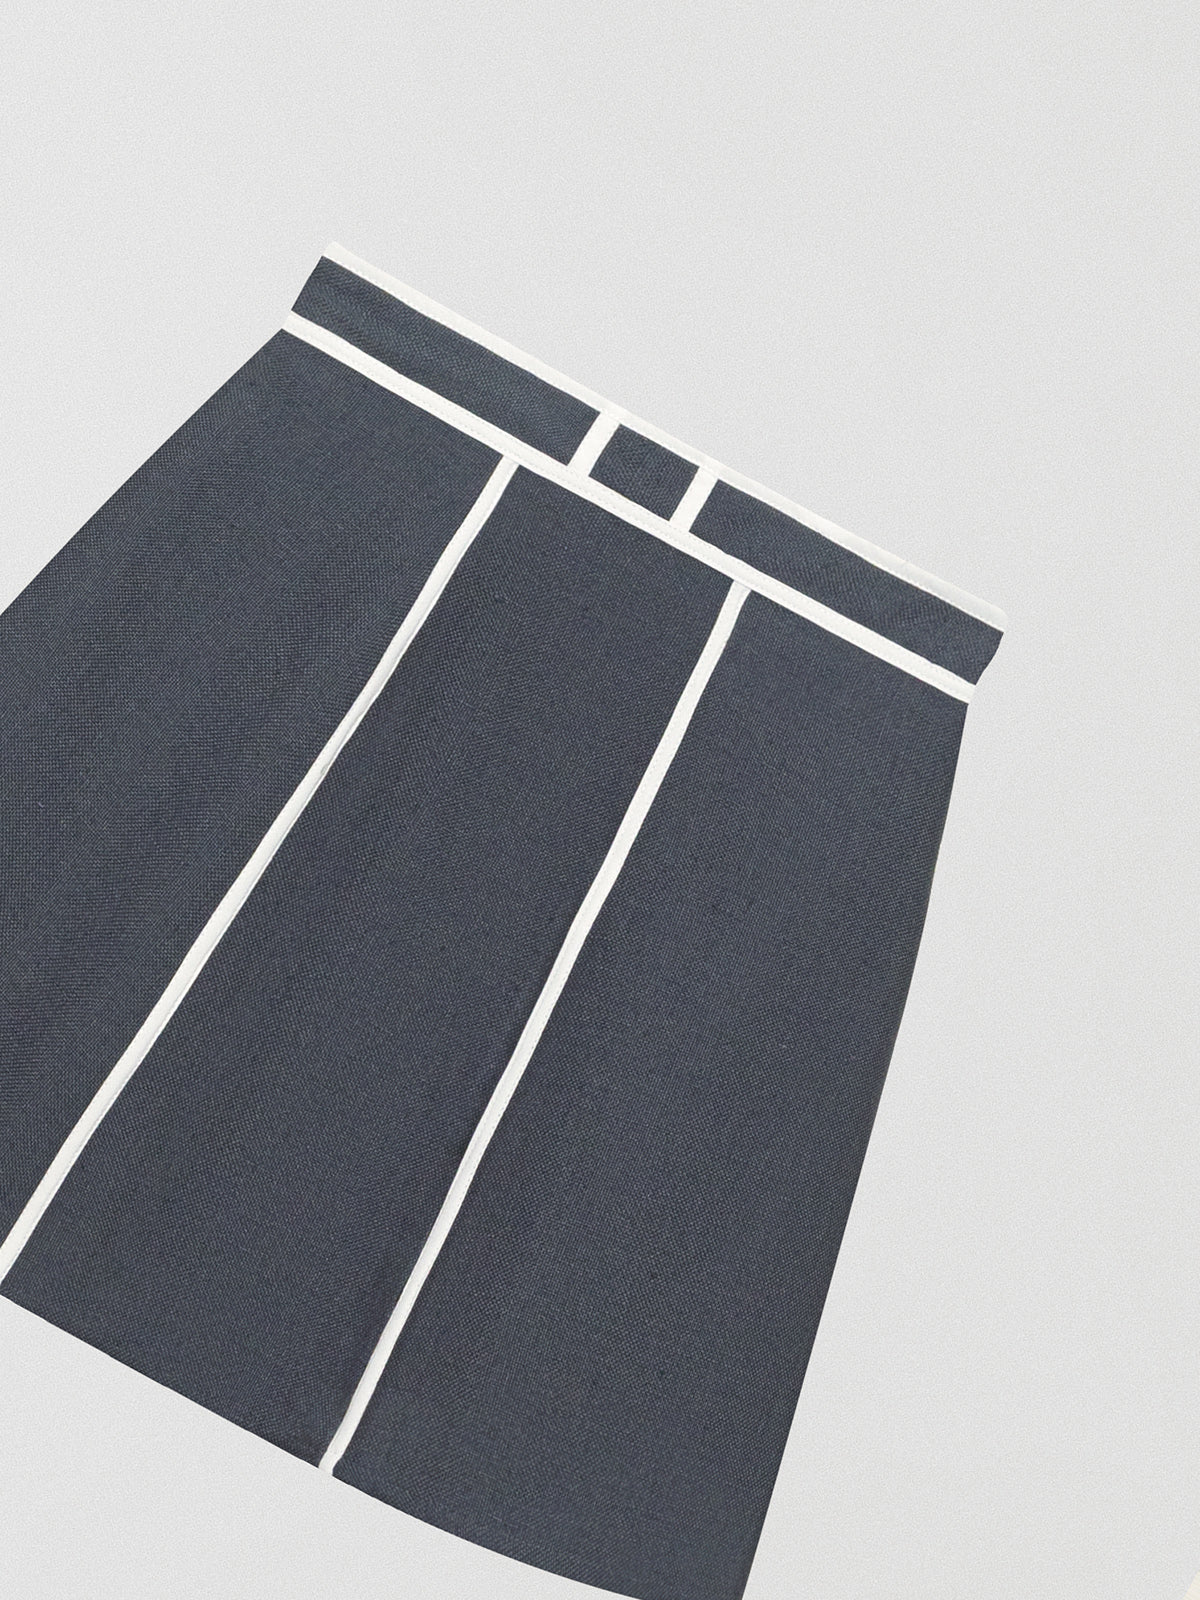 Flared linen grey mini skirt with white details.